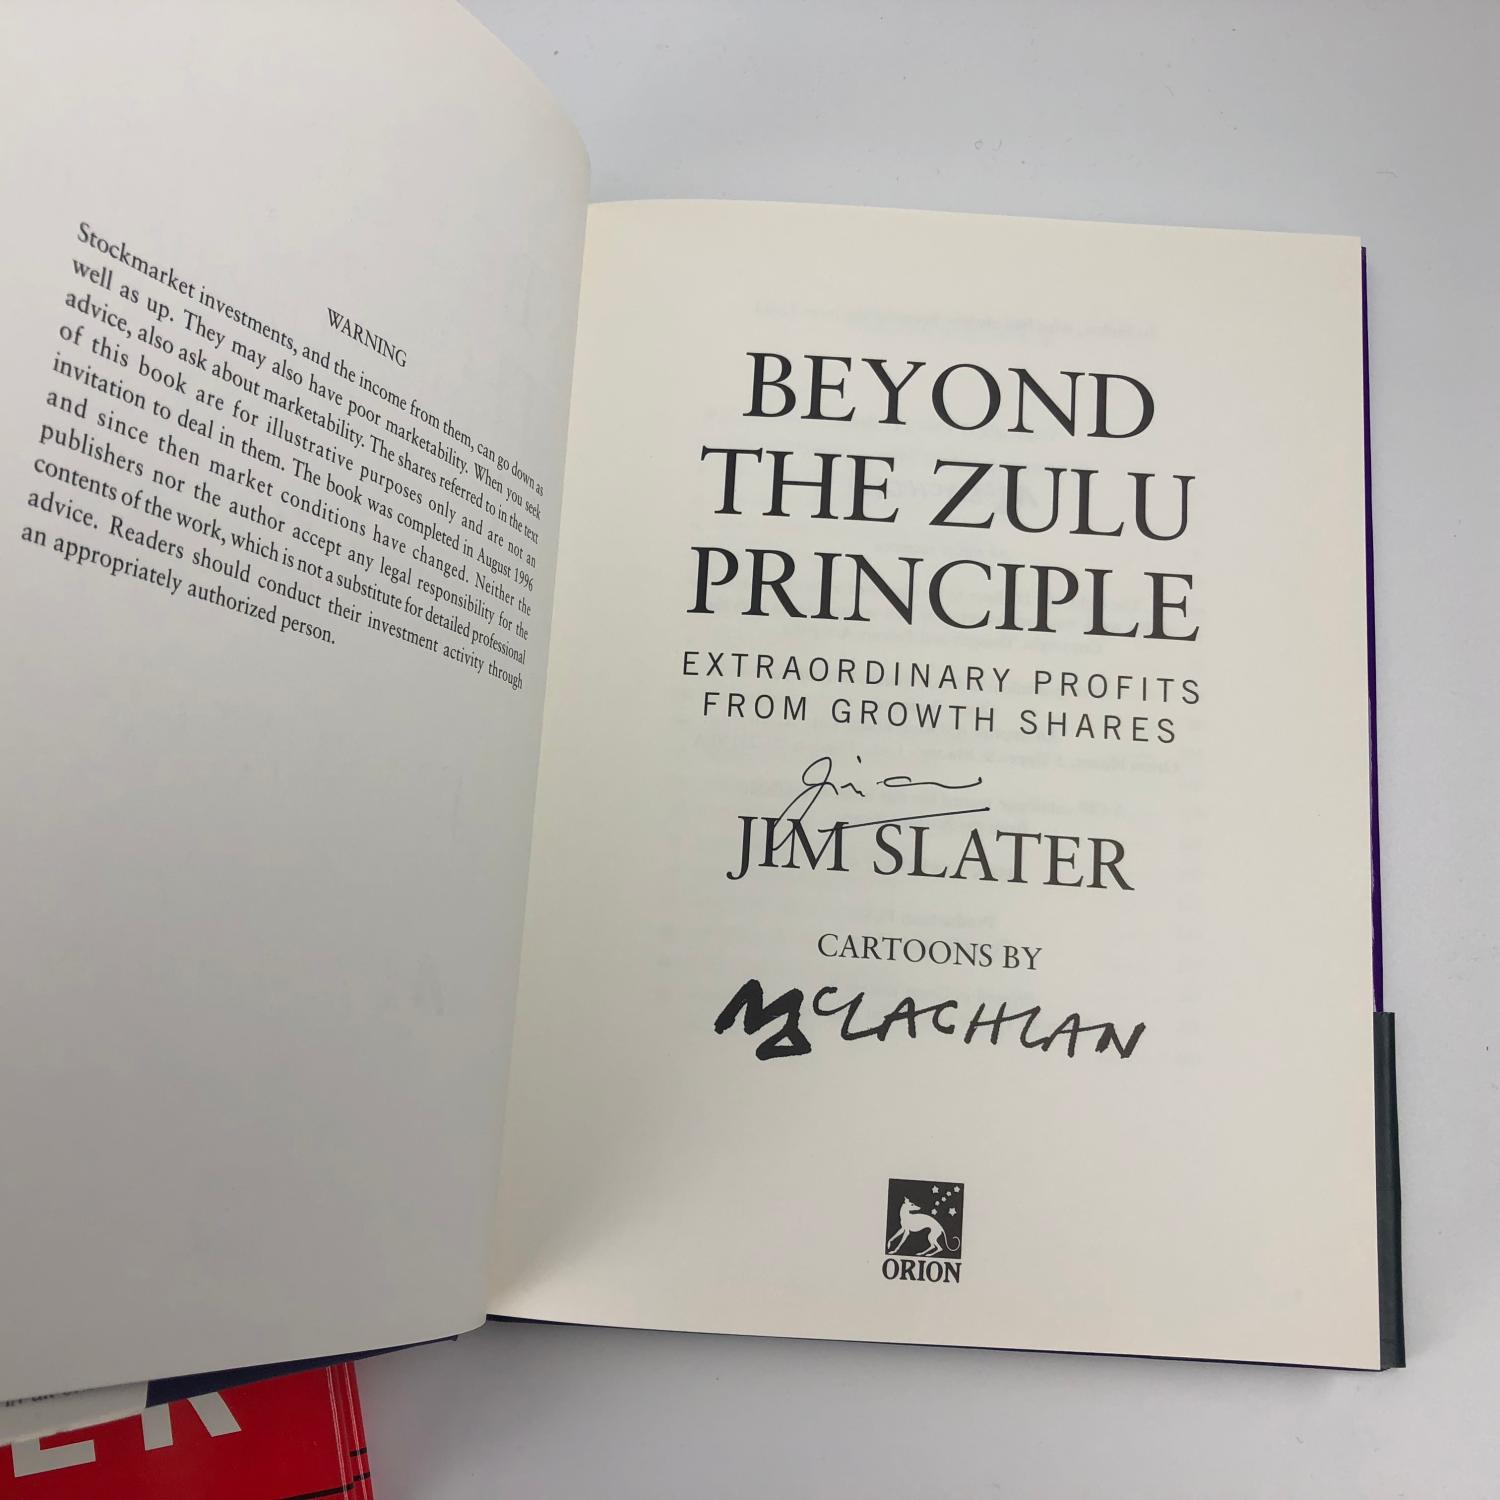 Beyond the zulu principle pdf